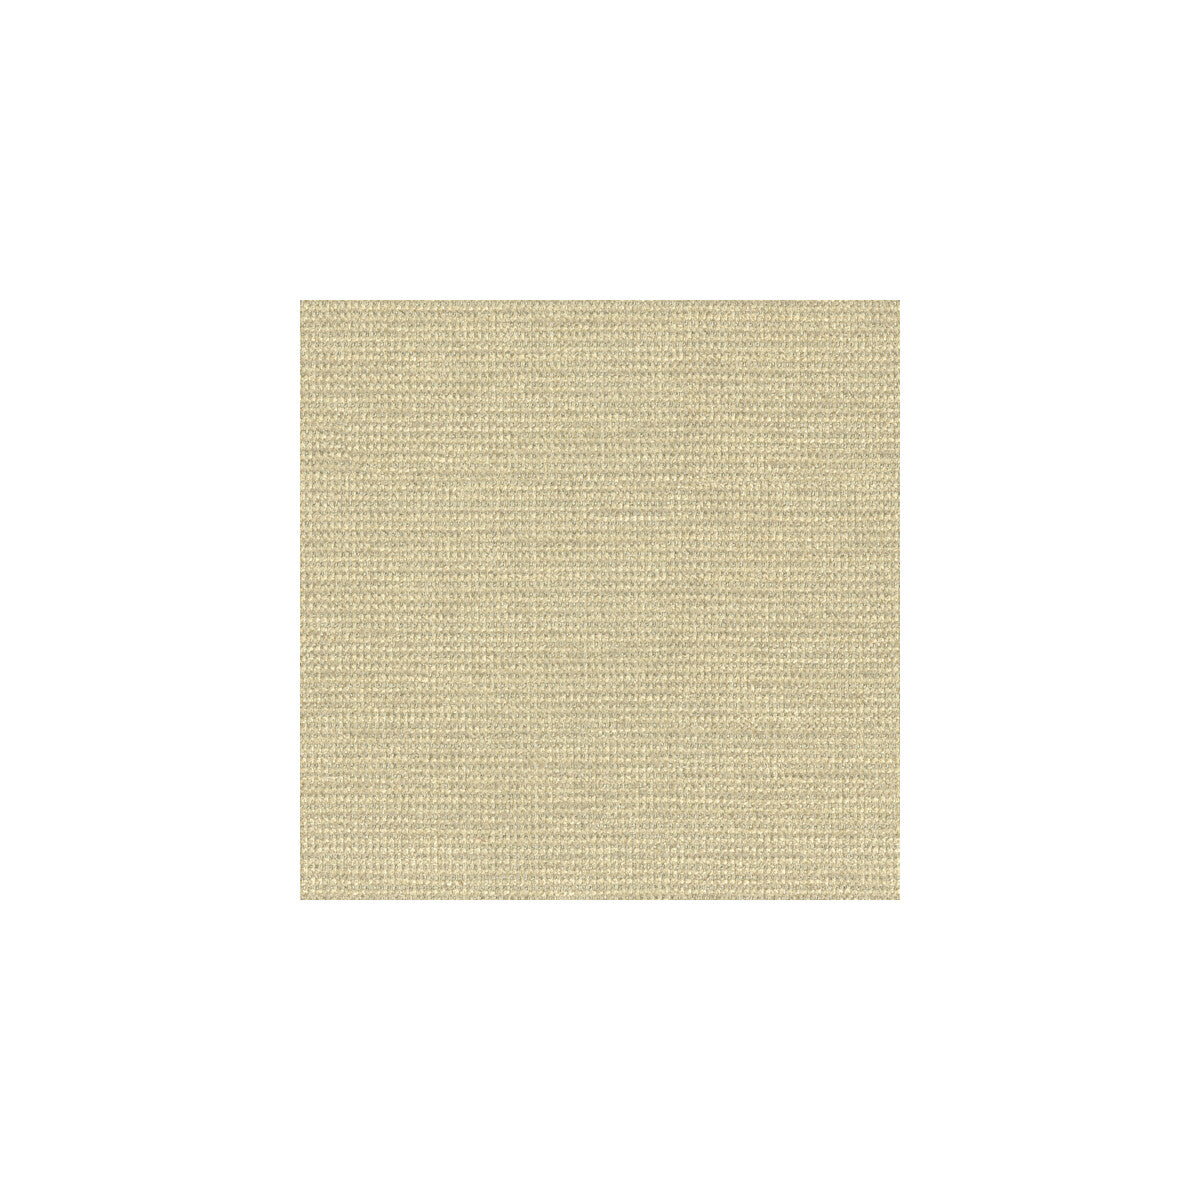 Kravet Smart fabric in 33027-116 color - pattern 33027.116.0 - by Kravet Smart